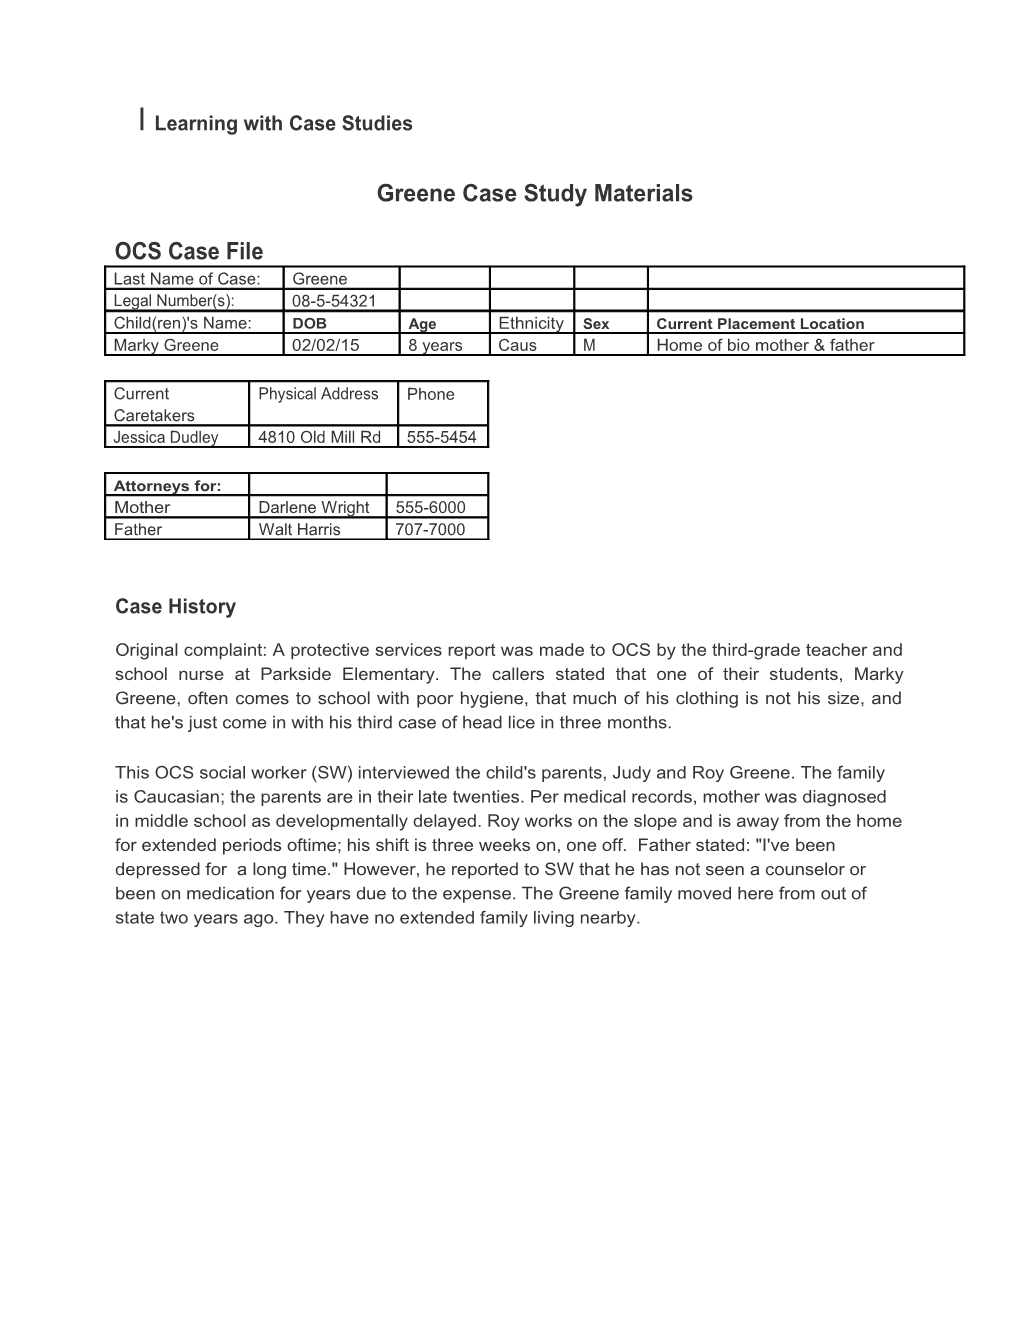 Greene Case Study Materials